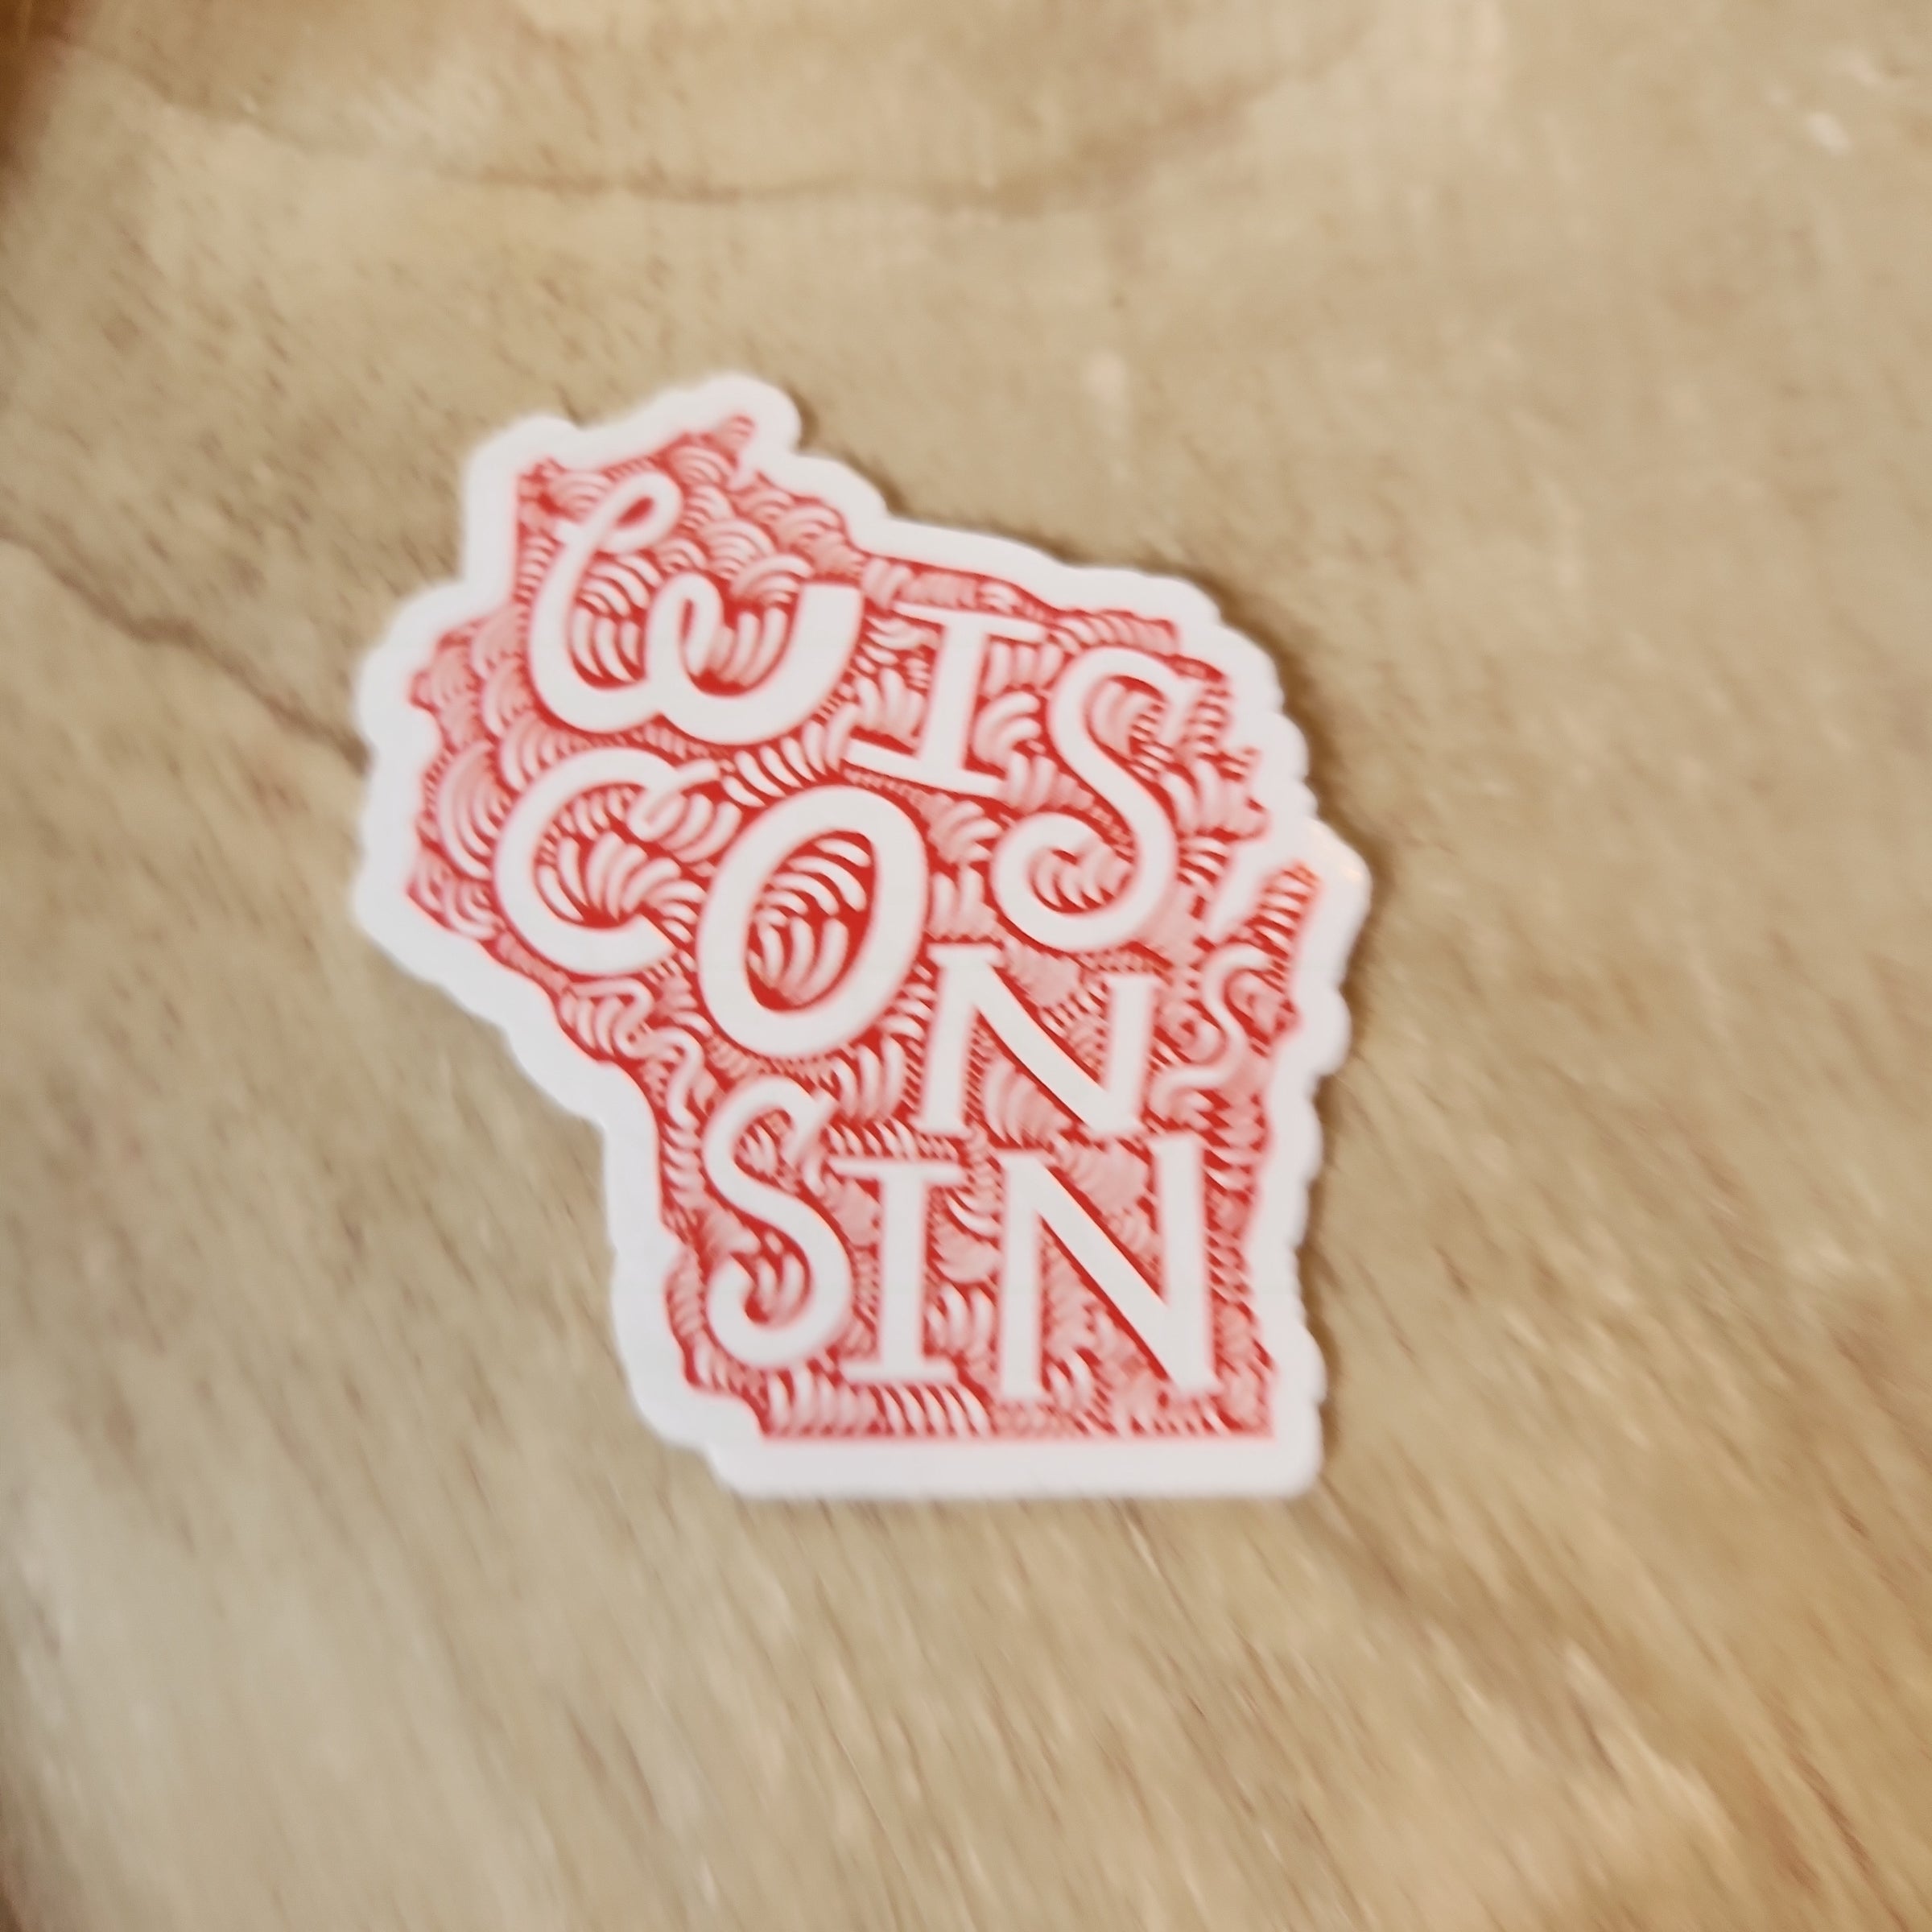 Wisconsin Stickers